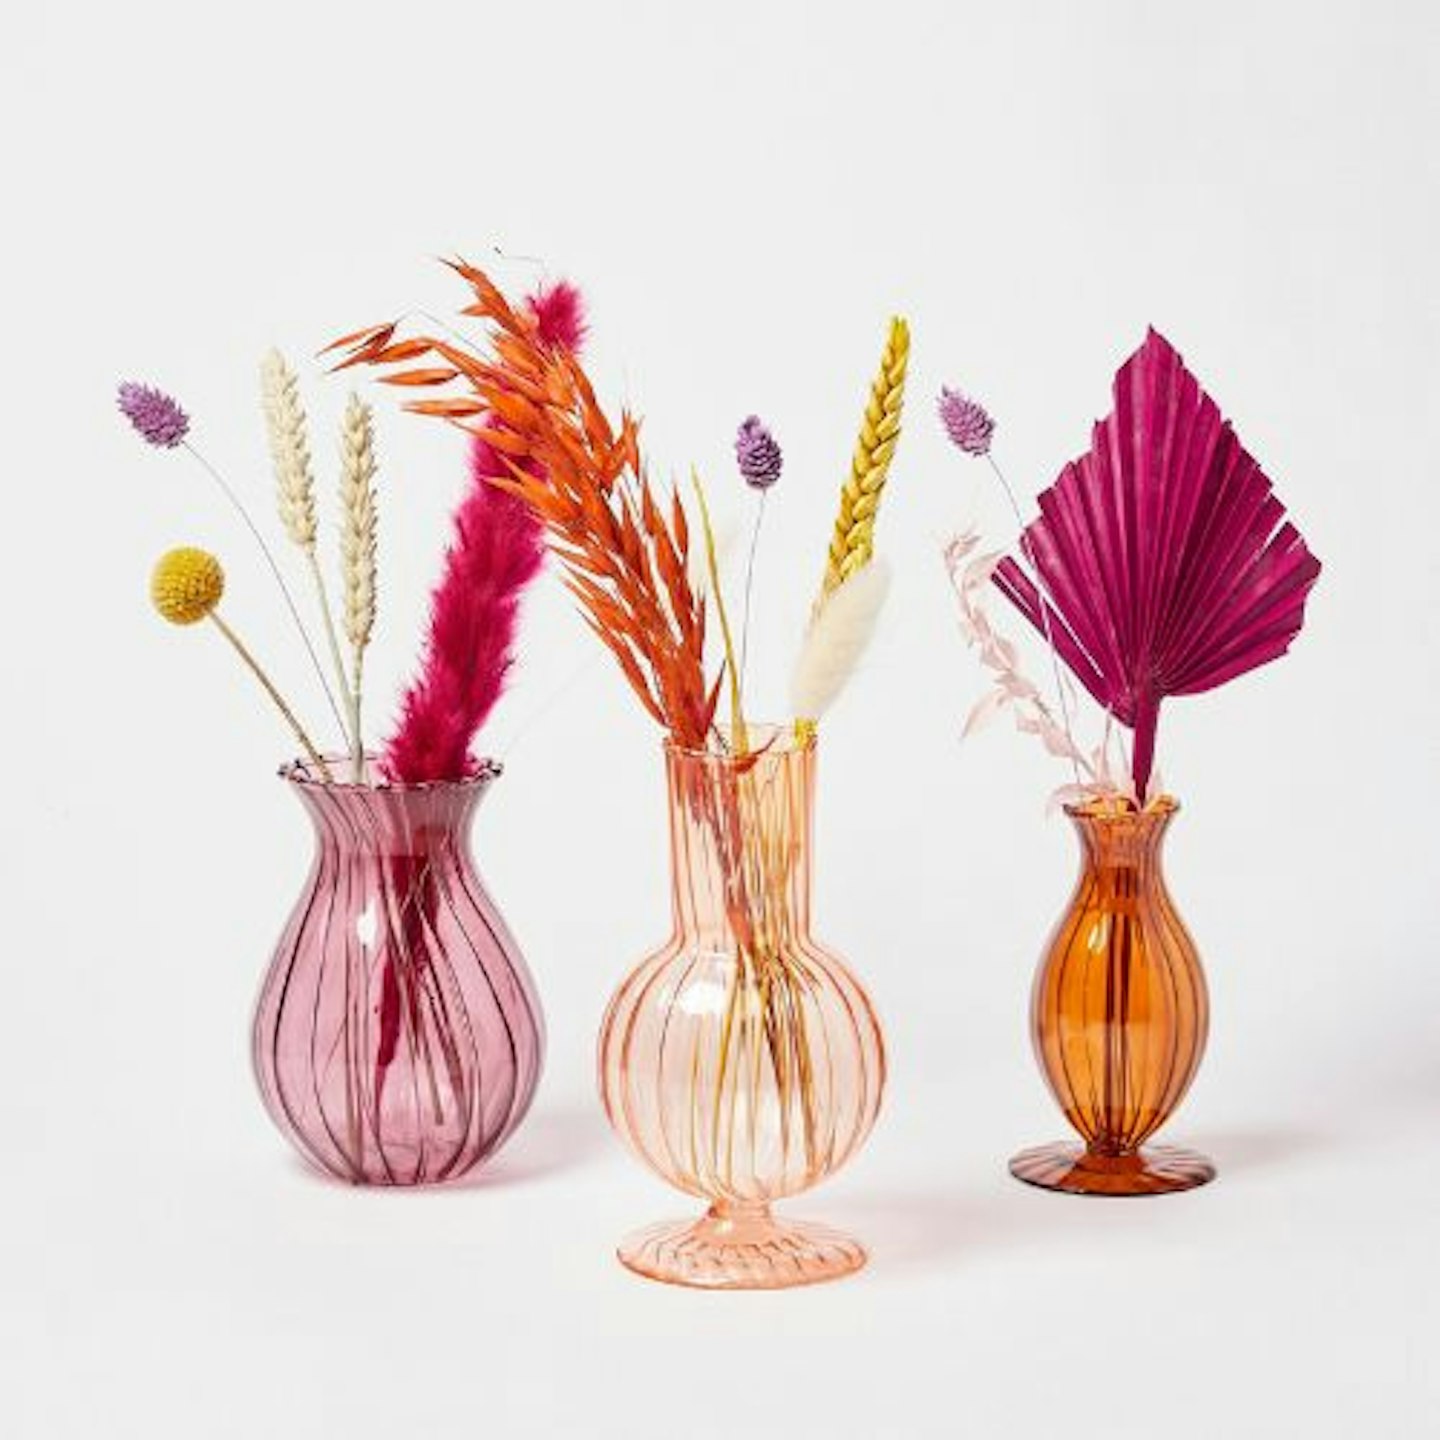 Oliver Bonas, Aude Glass Bud Vases